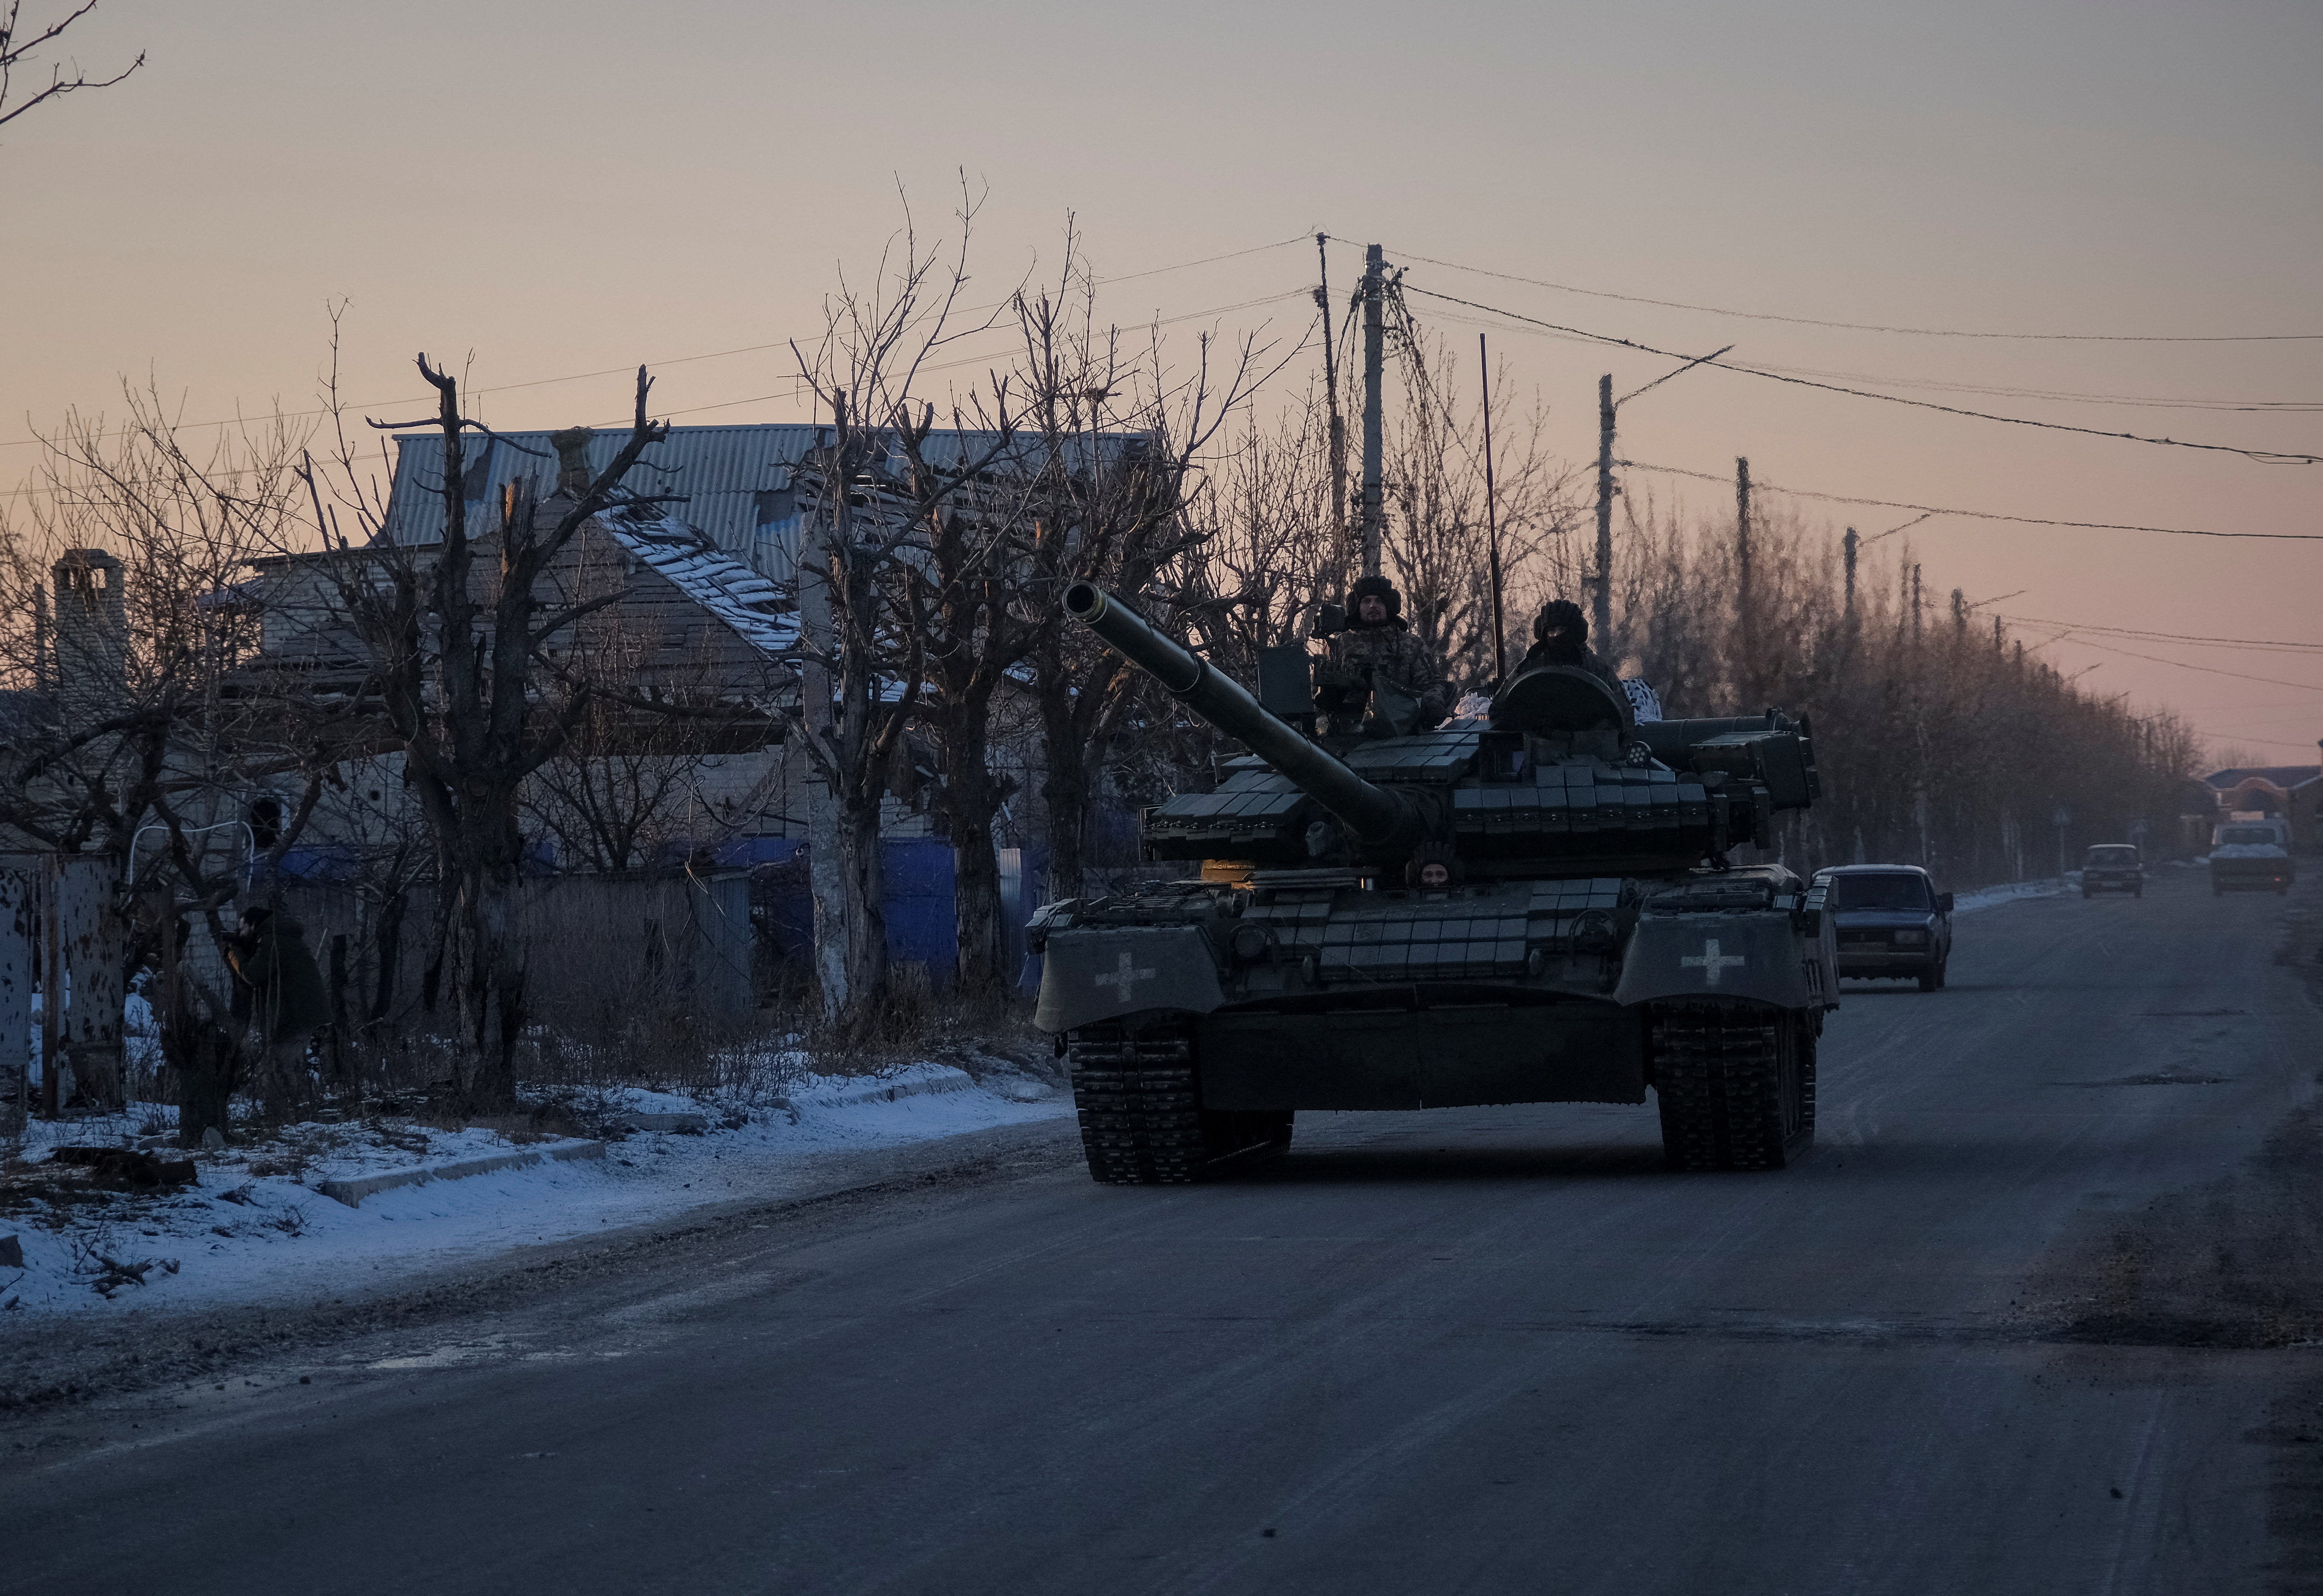 Ukrainian service members ride a tank near Lyman